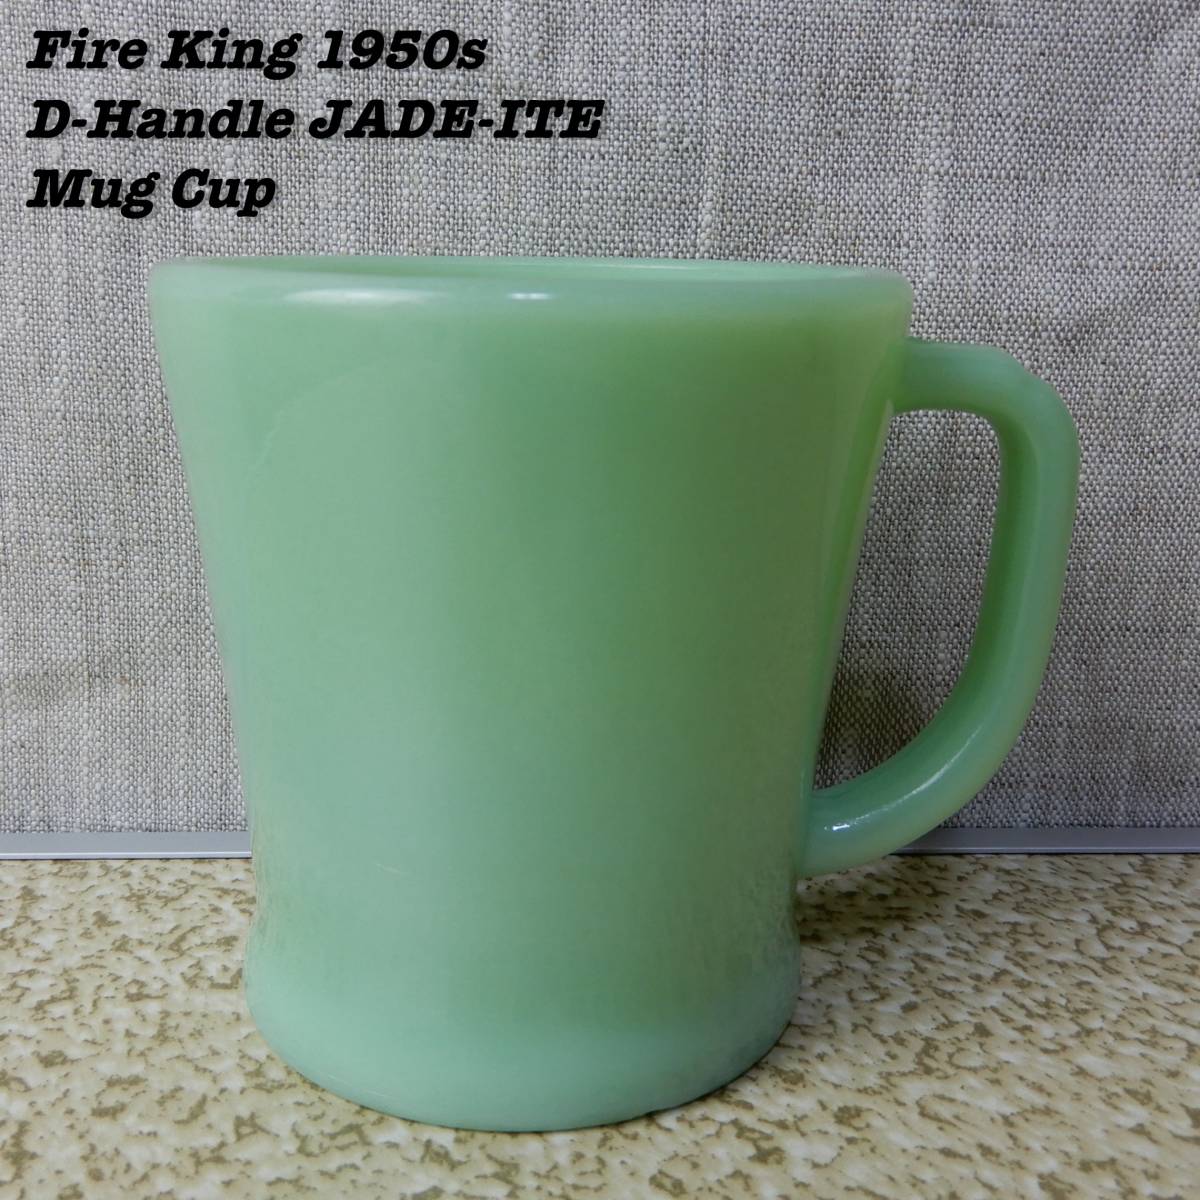 Fire King JADE-ITE D-Handle Mug Cup 1952s-1955s Flat Bottom ③